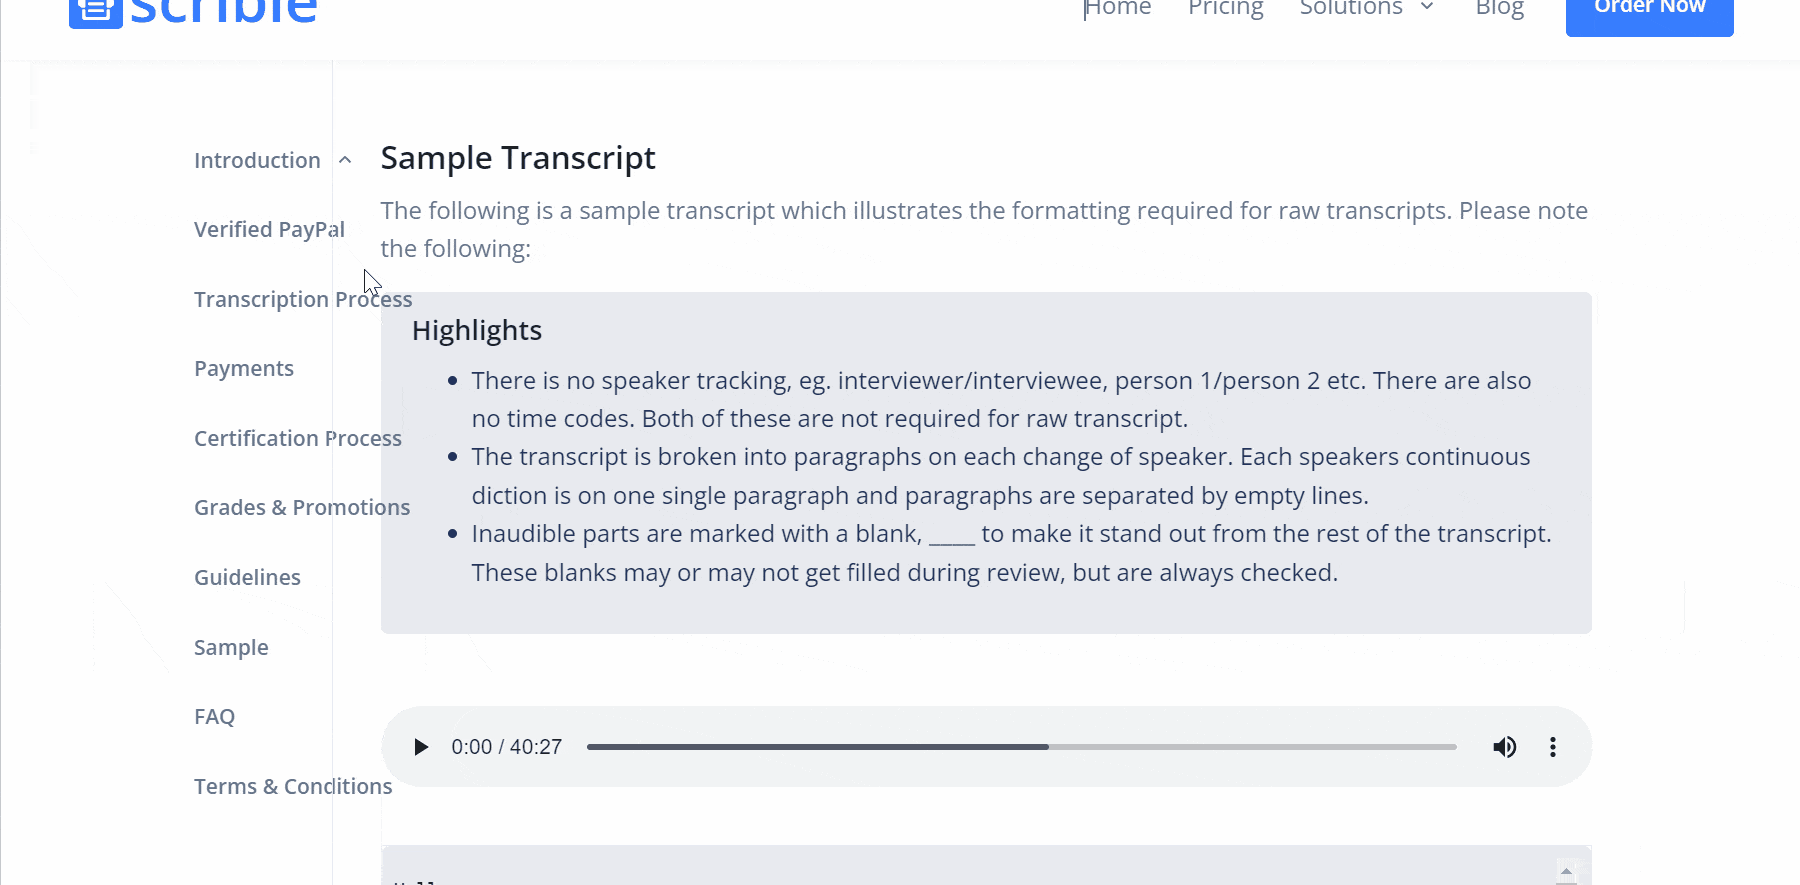 scribie transcription sample